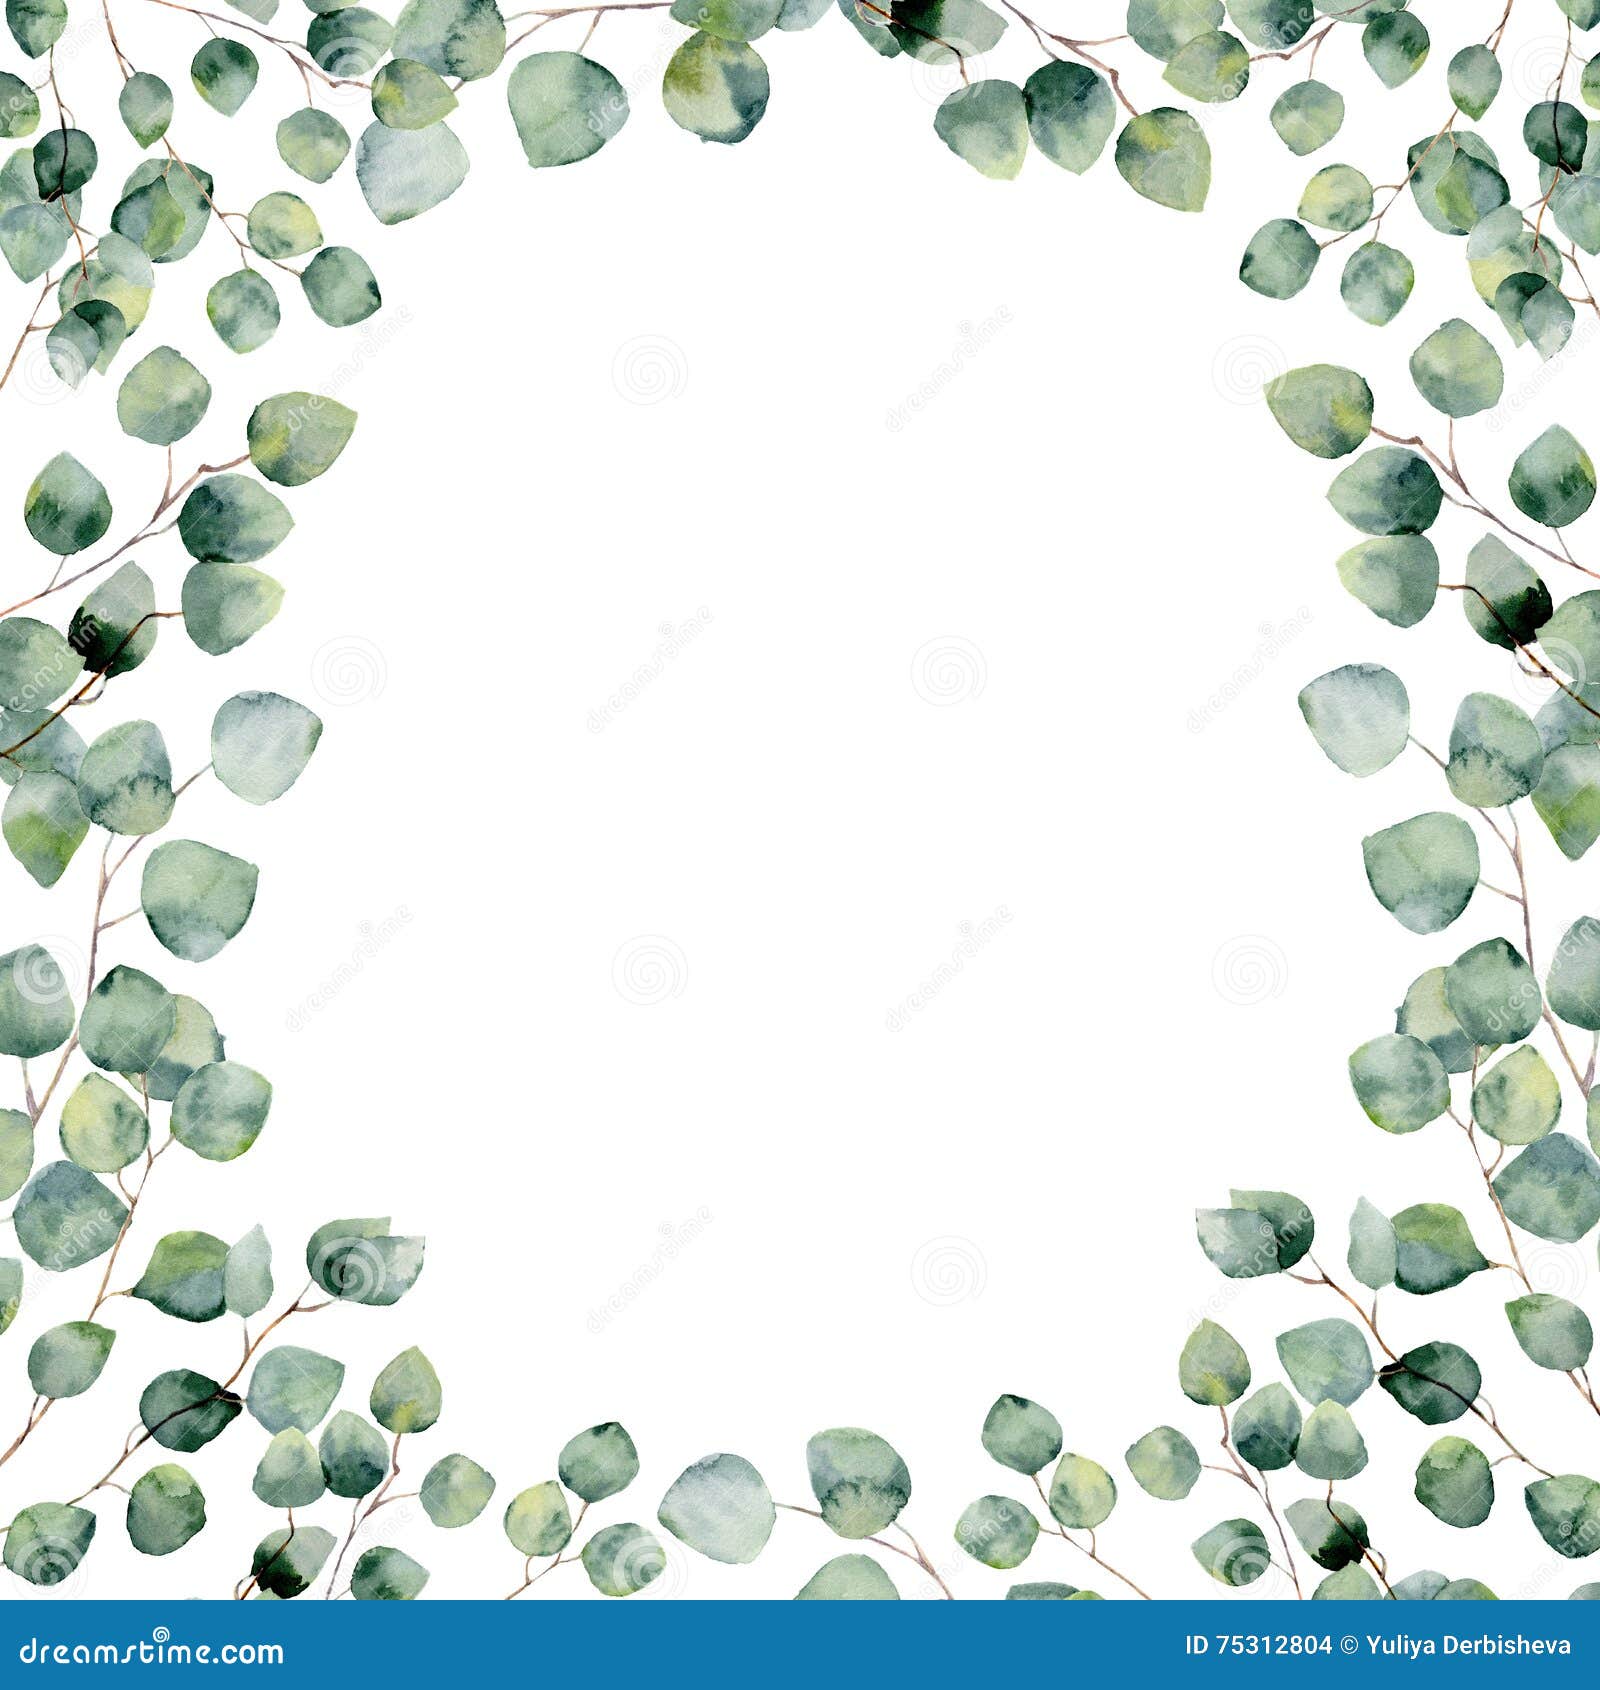 Aquarellgrune Blumenrahmenkarte Mit Runden Blattern Des Eukalyptus Stock Abbildung Illustration Von Blumenrahmenkarte Eukalyptus